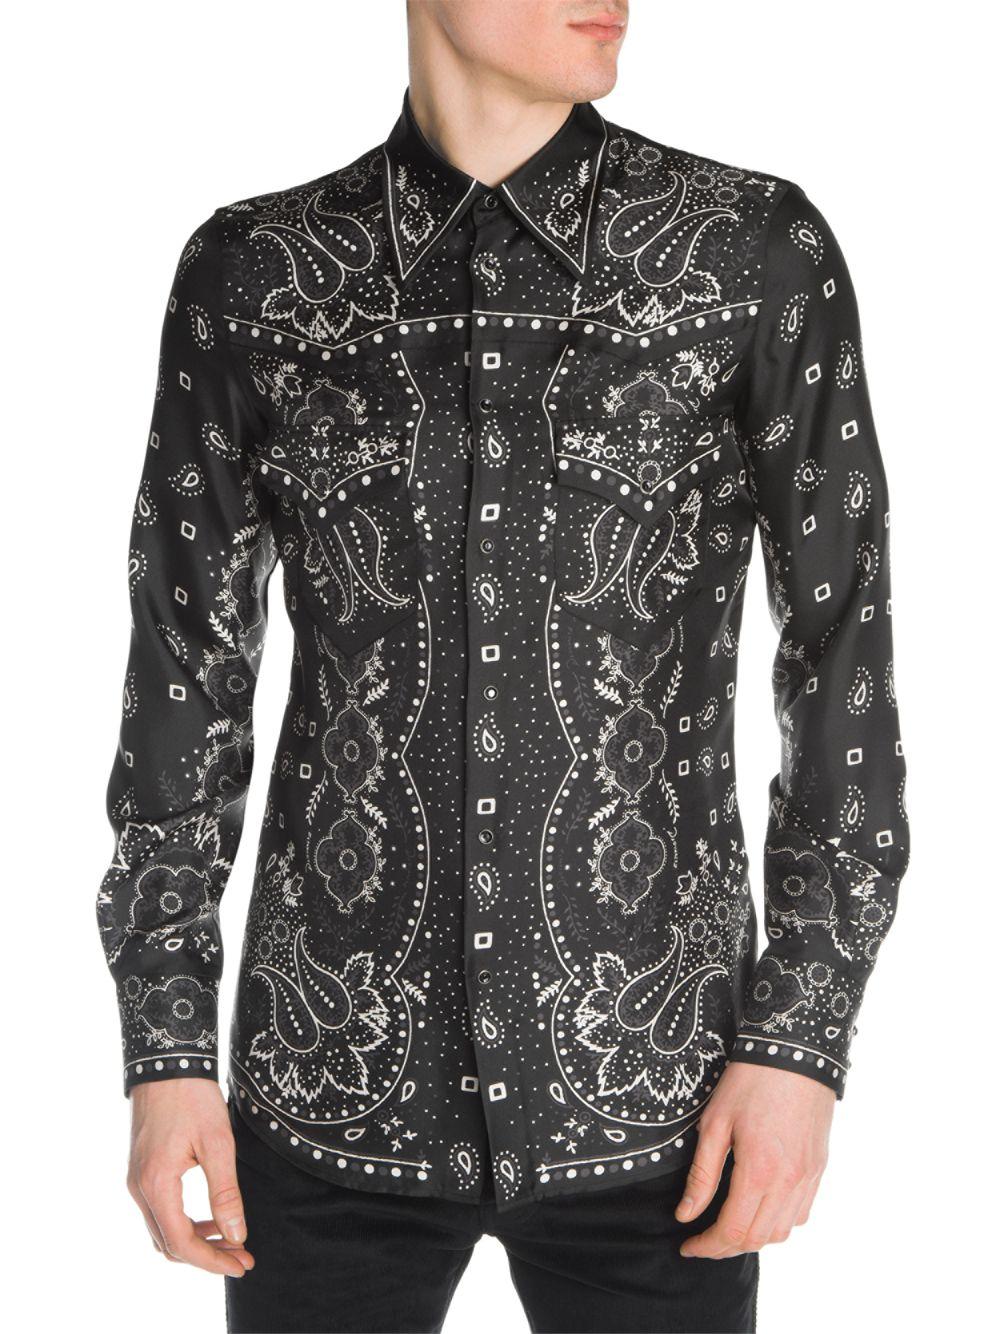 Viktor & Rolf Silk Bandana Print Button-down Shirt in Black for Men - Lyst